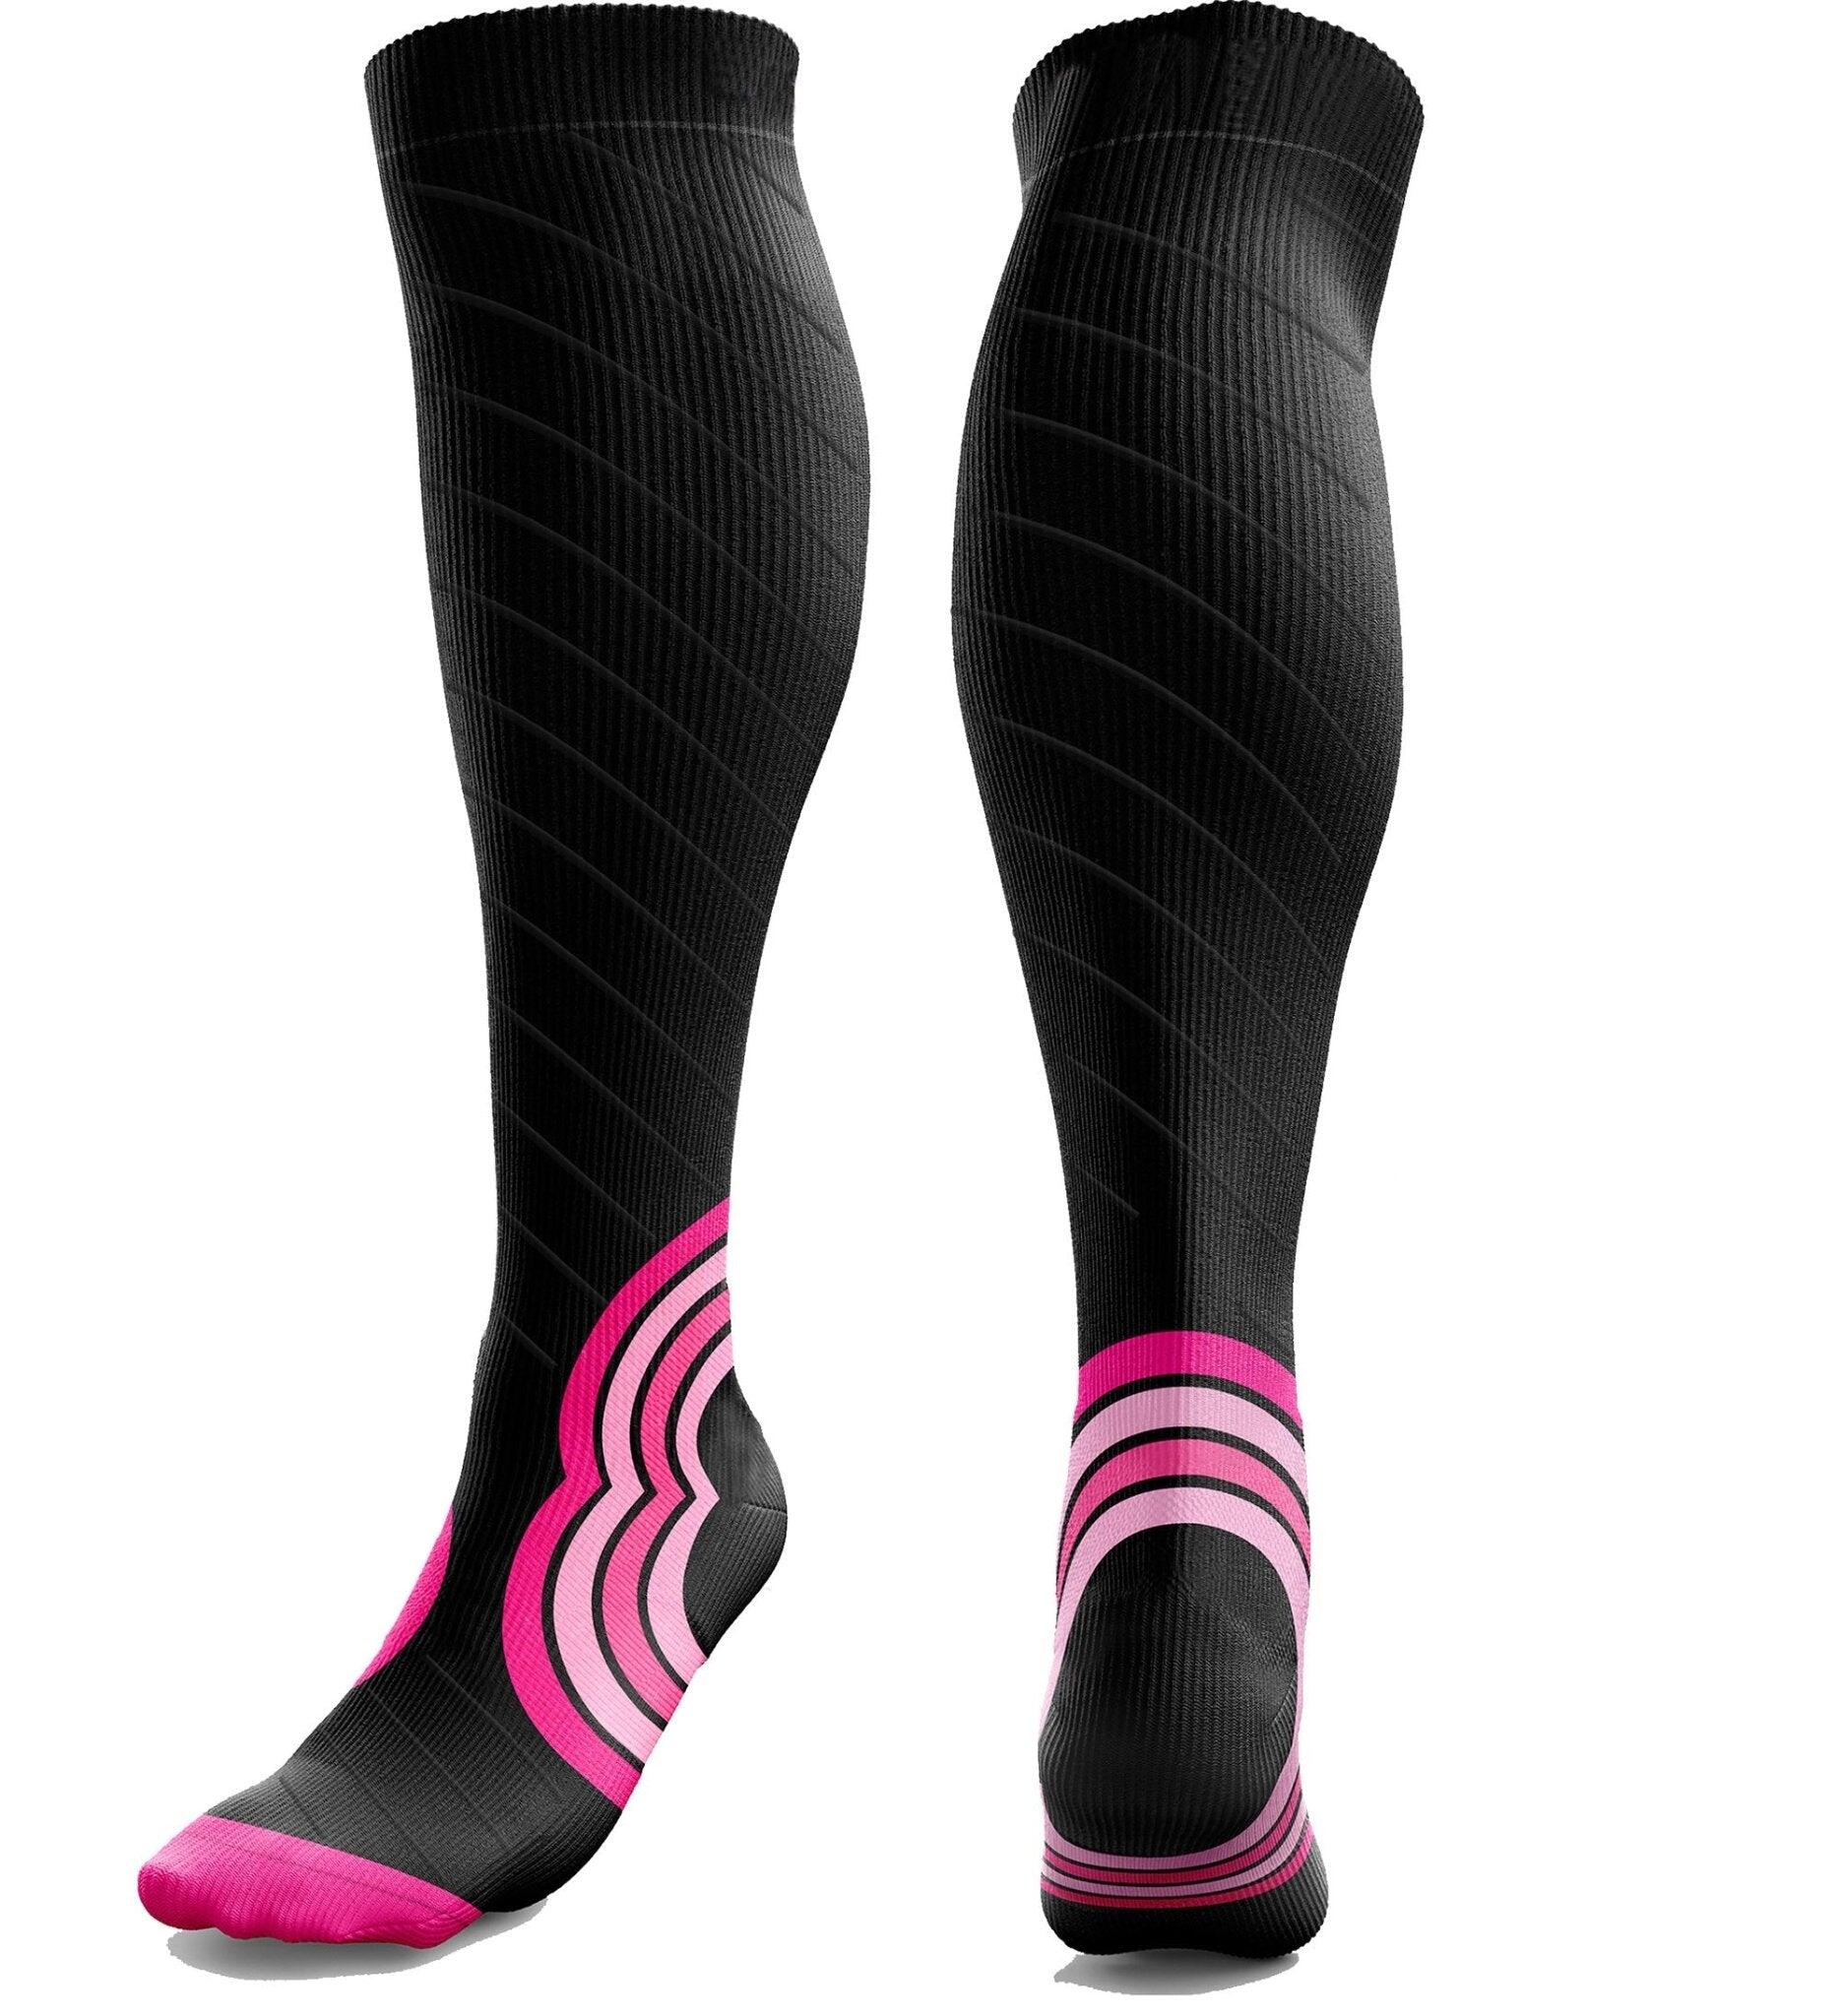 AZENGEAR Calf Support Compression Socks for Men & Women (20-30 mmHg)(Black w/Pink)